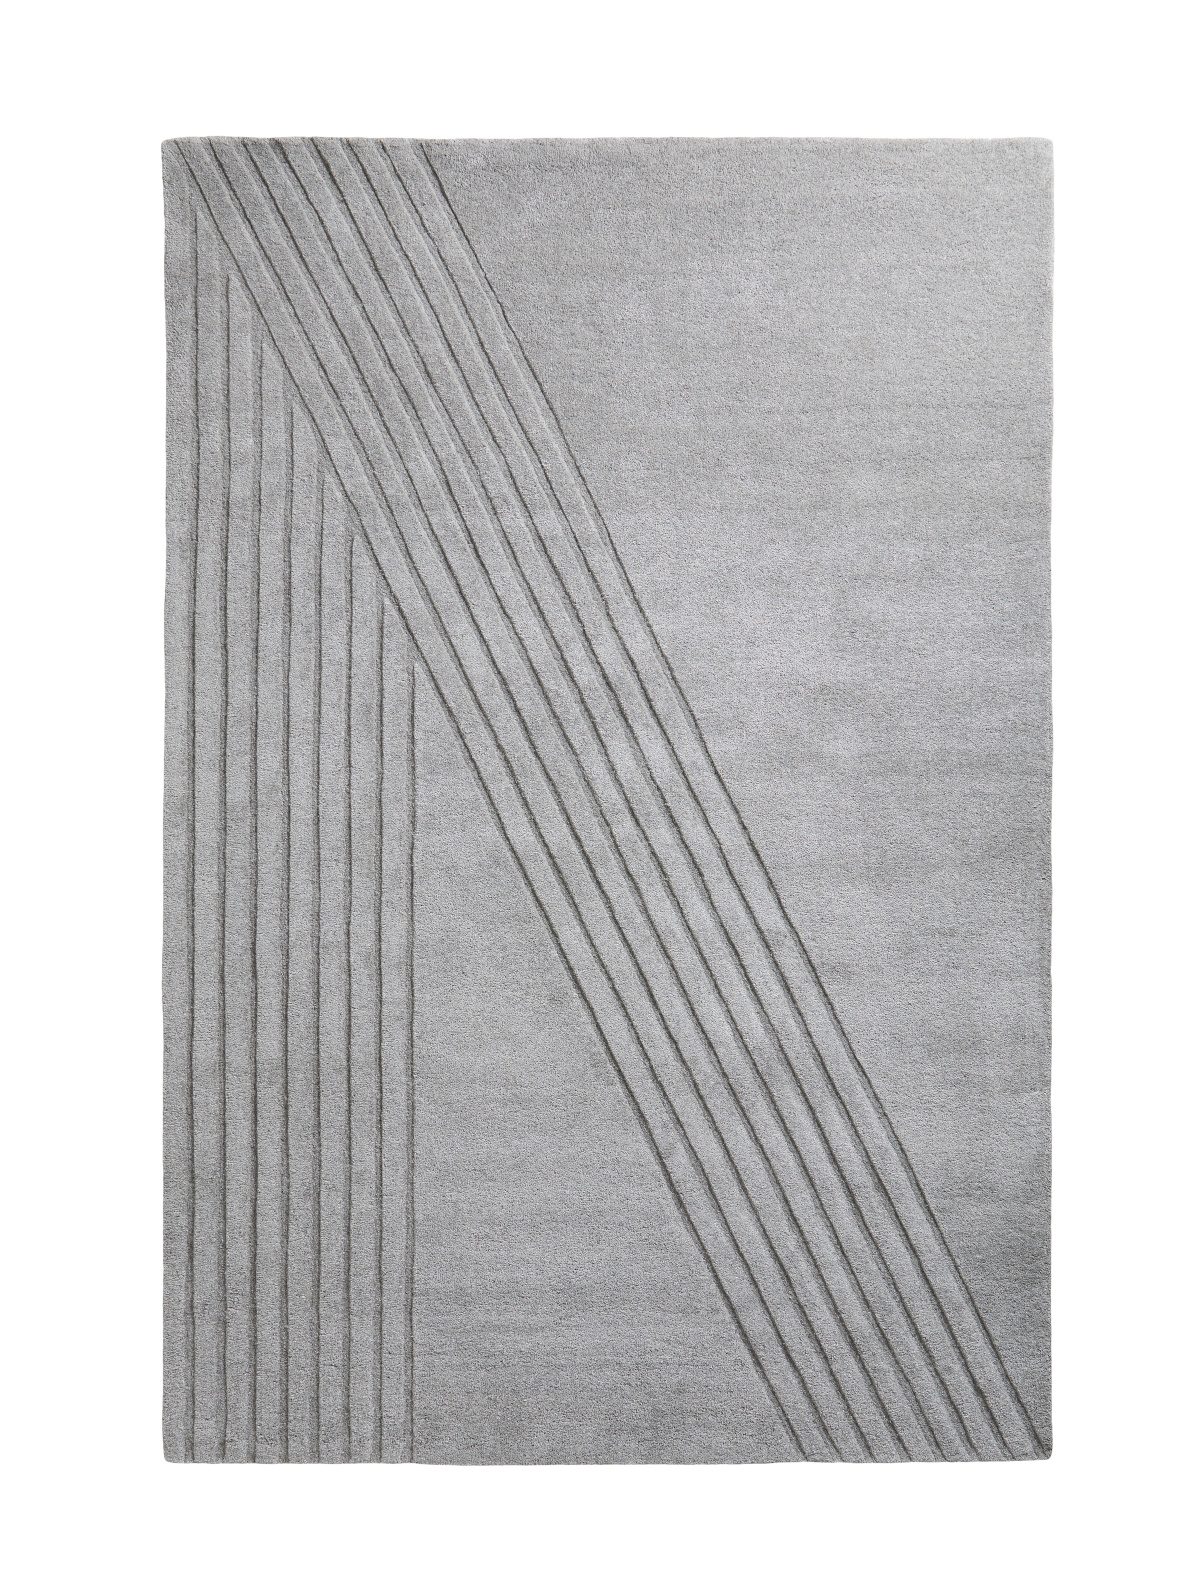 Kyoto Teppich, 170 x 240 cm, grey